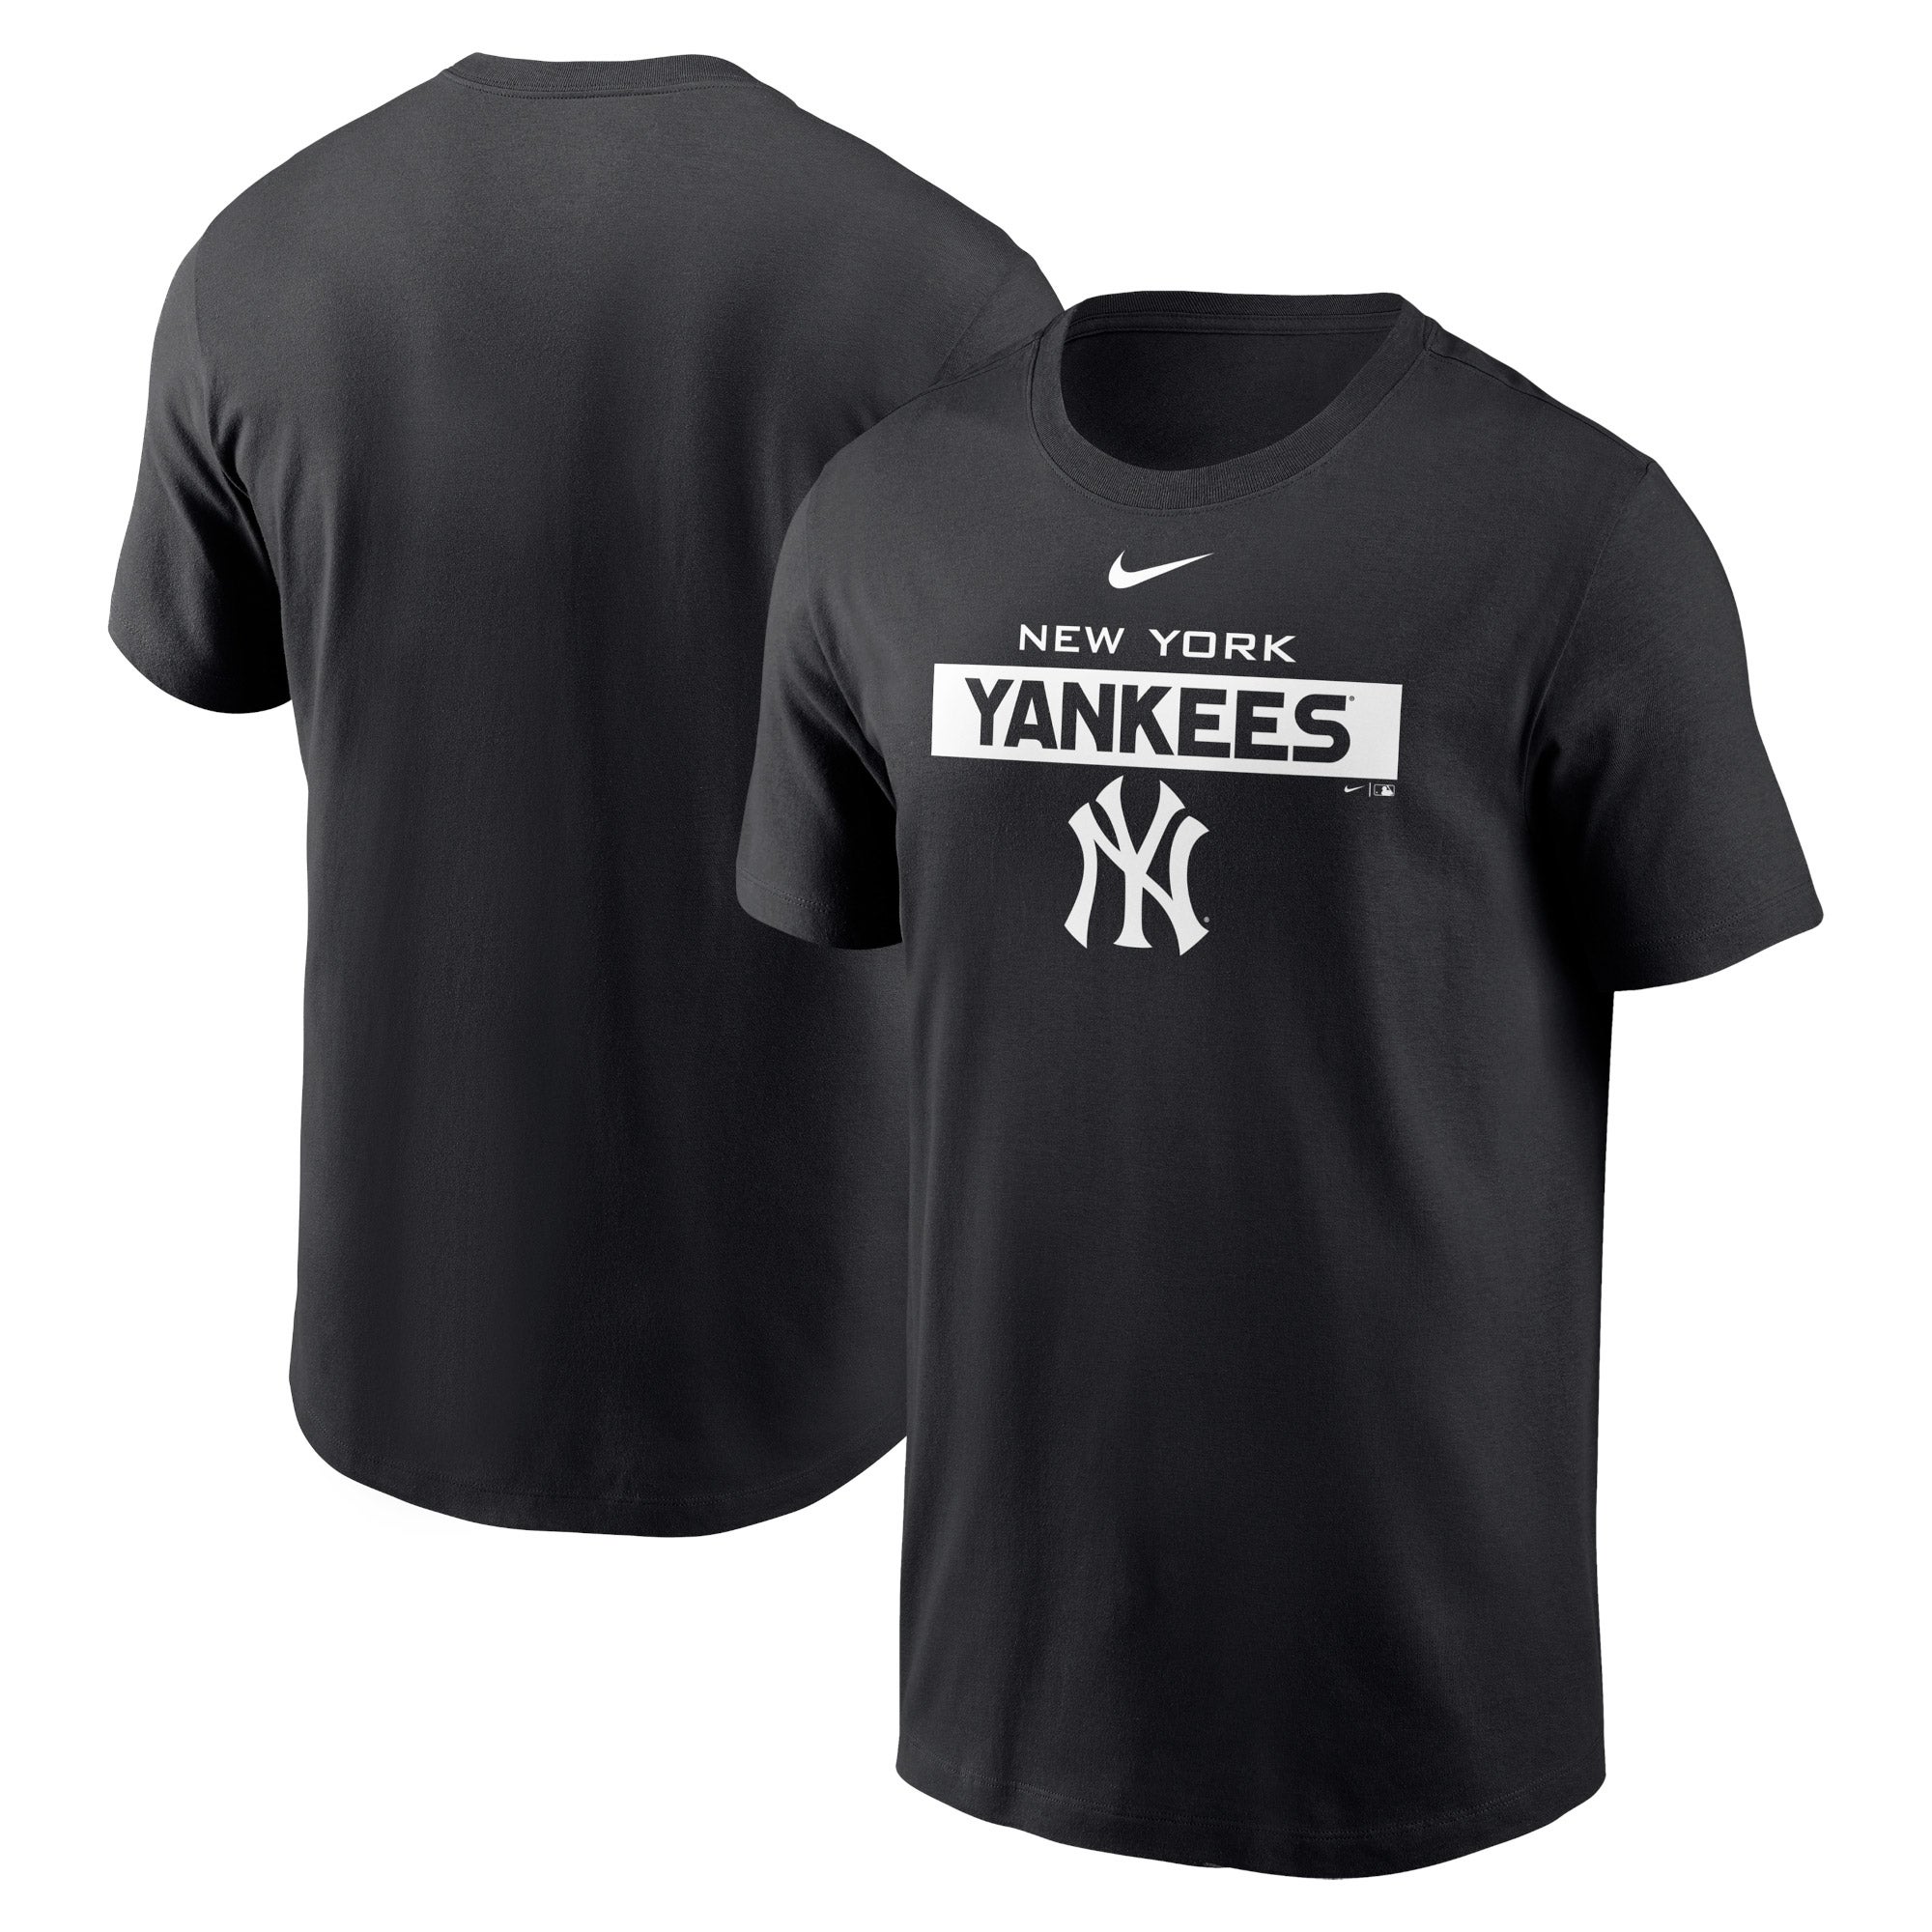 Nike Yankees Team T-Shirt - Men's